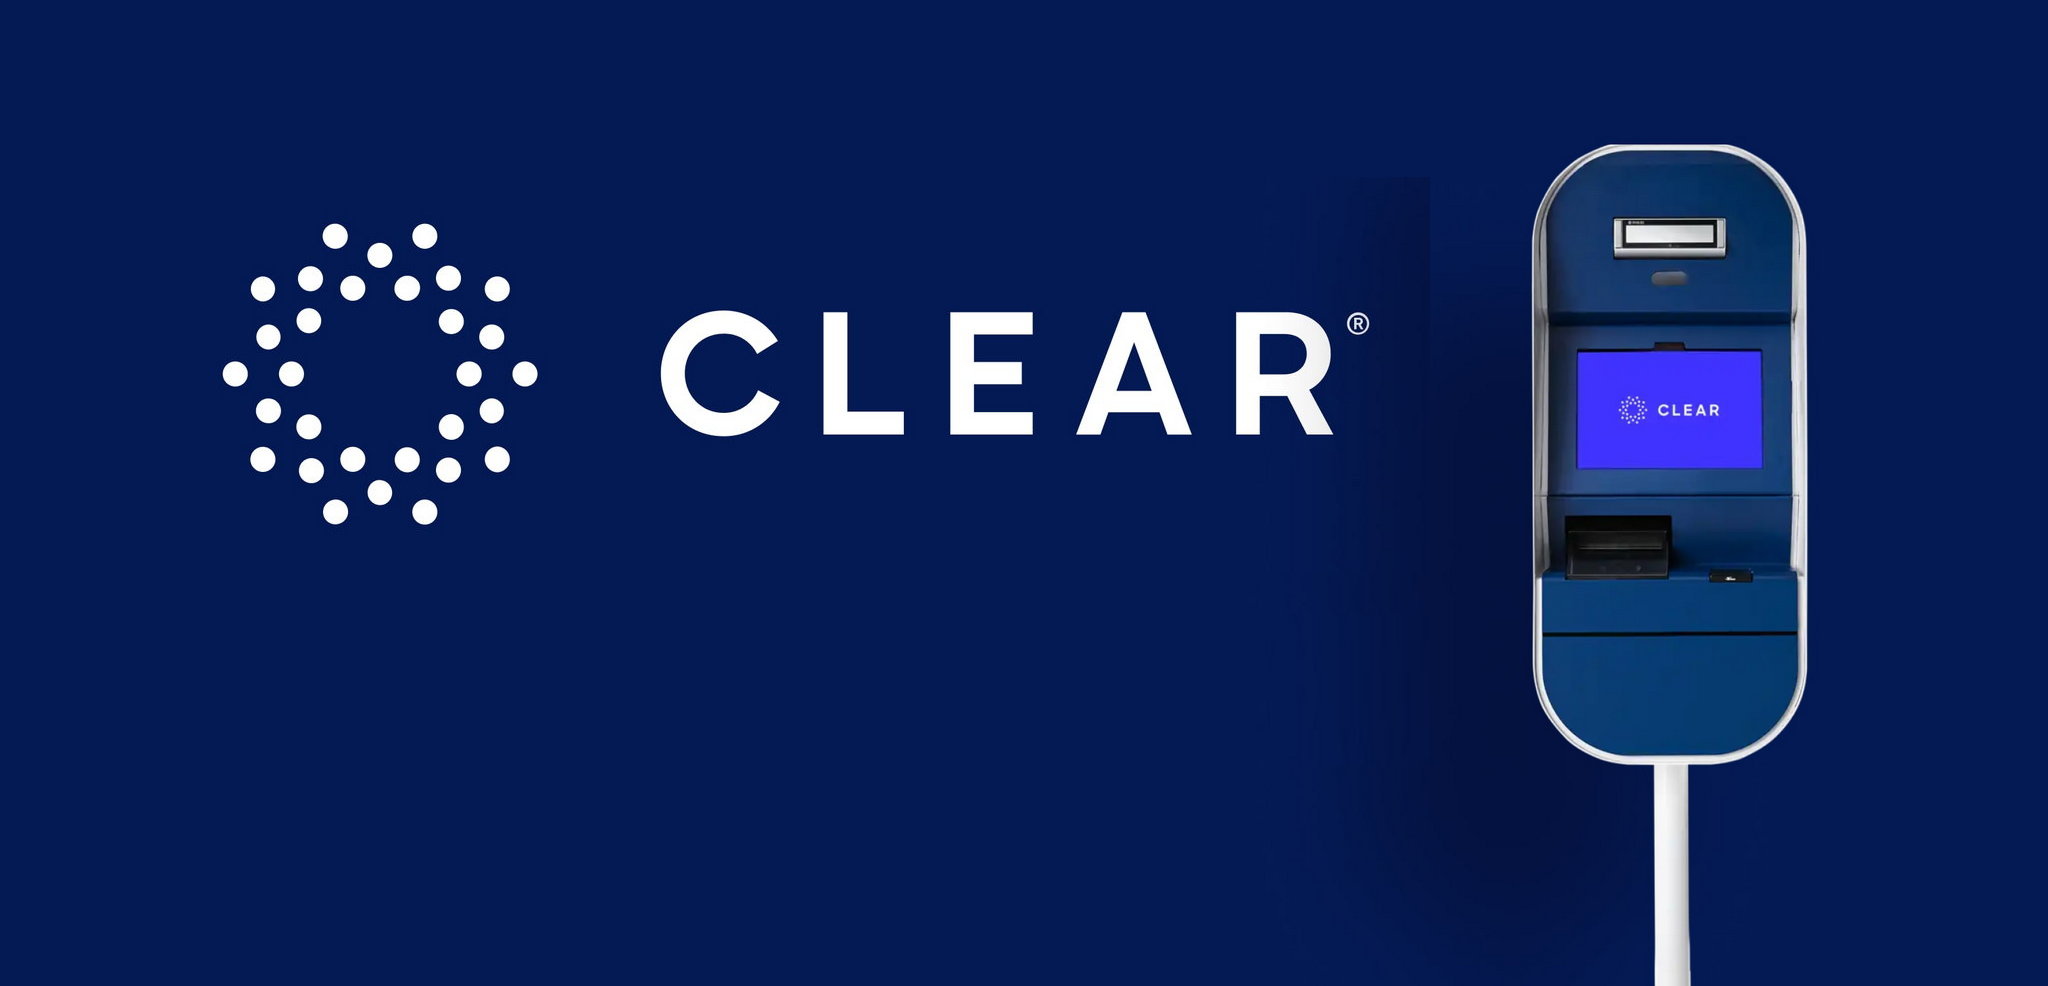 CLEAR logo and verification machine